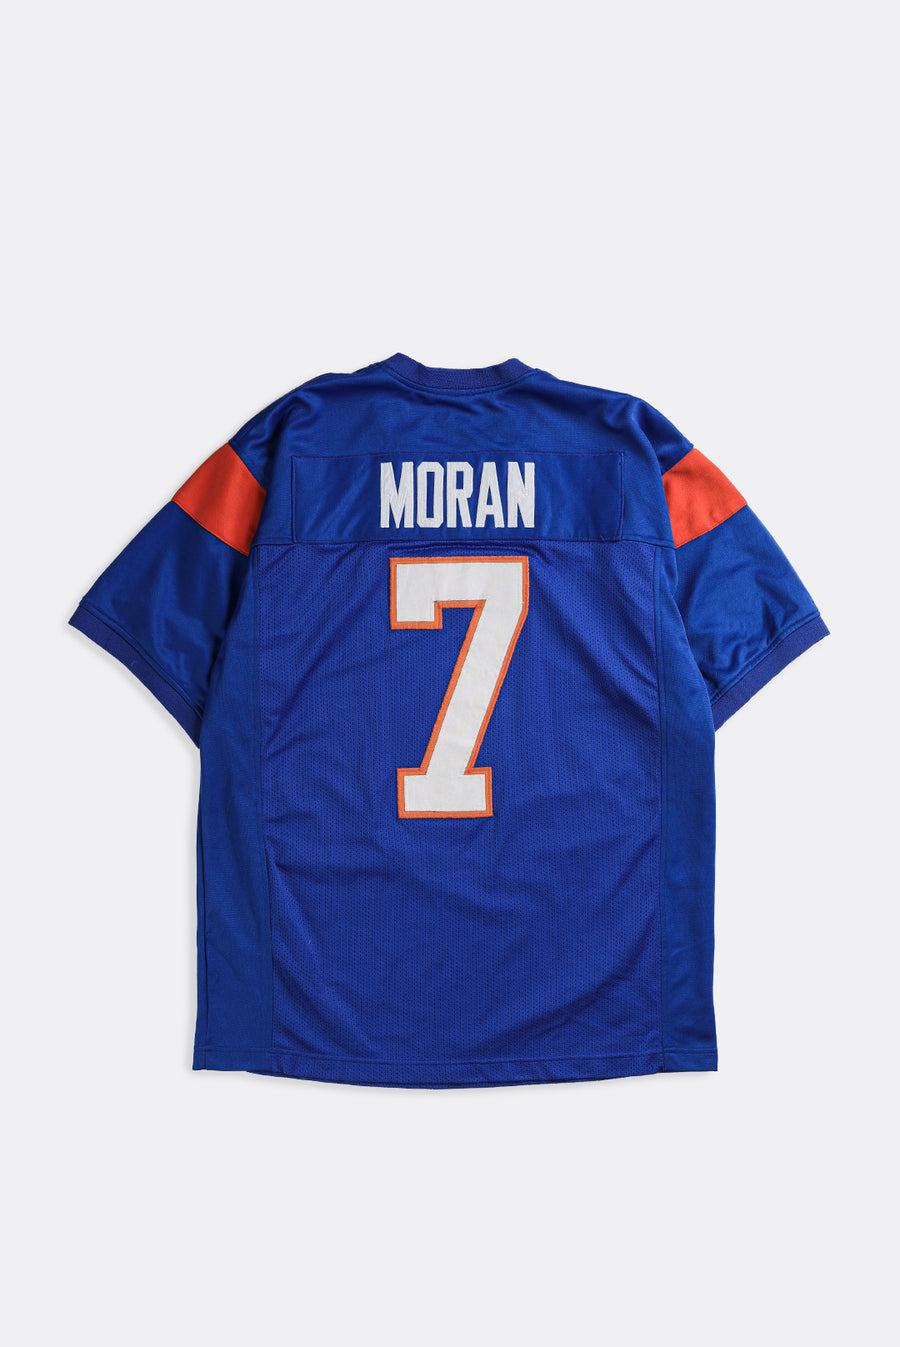 Vintage Moran Football Jersey - XL